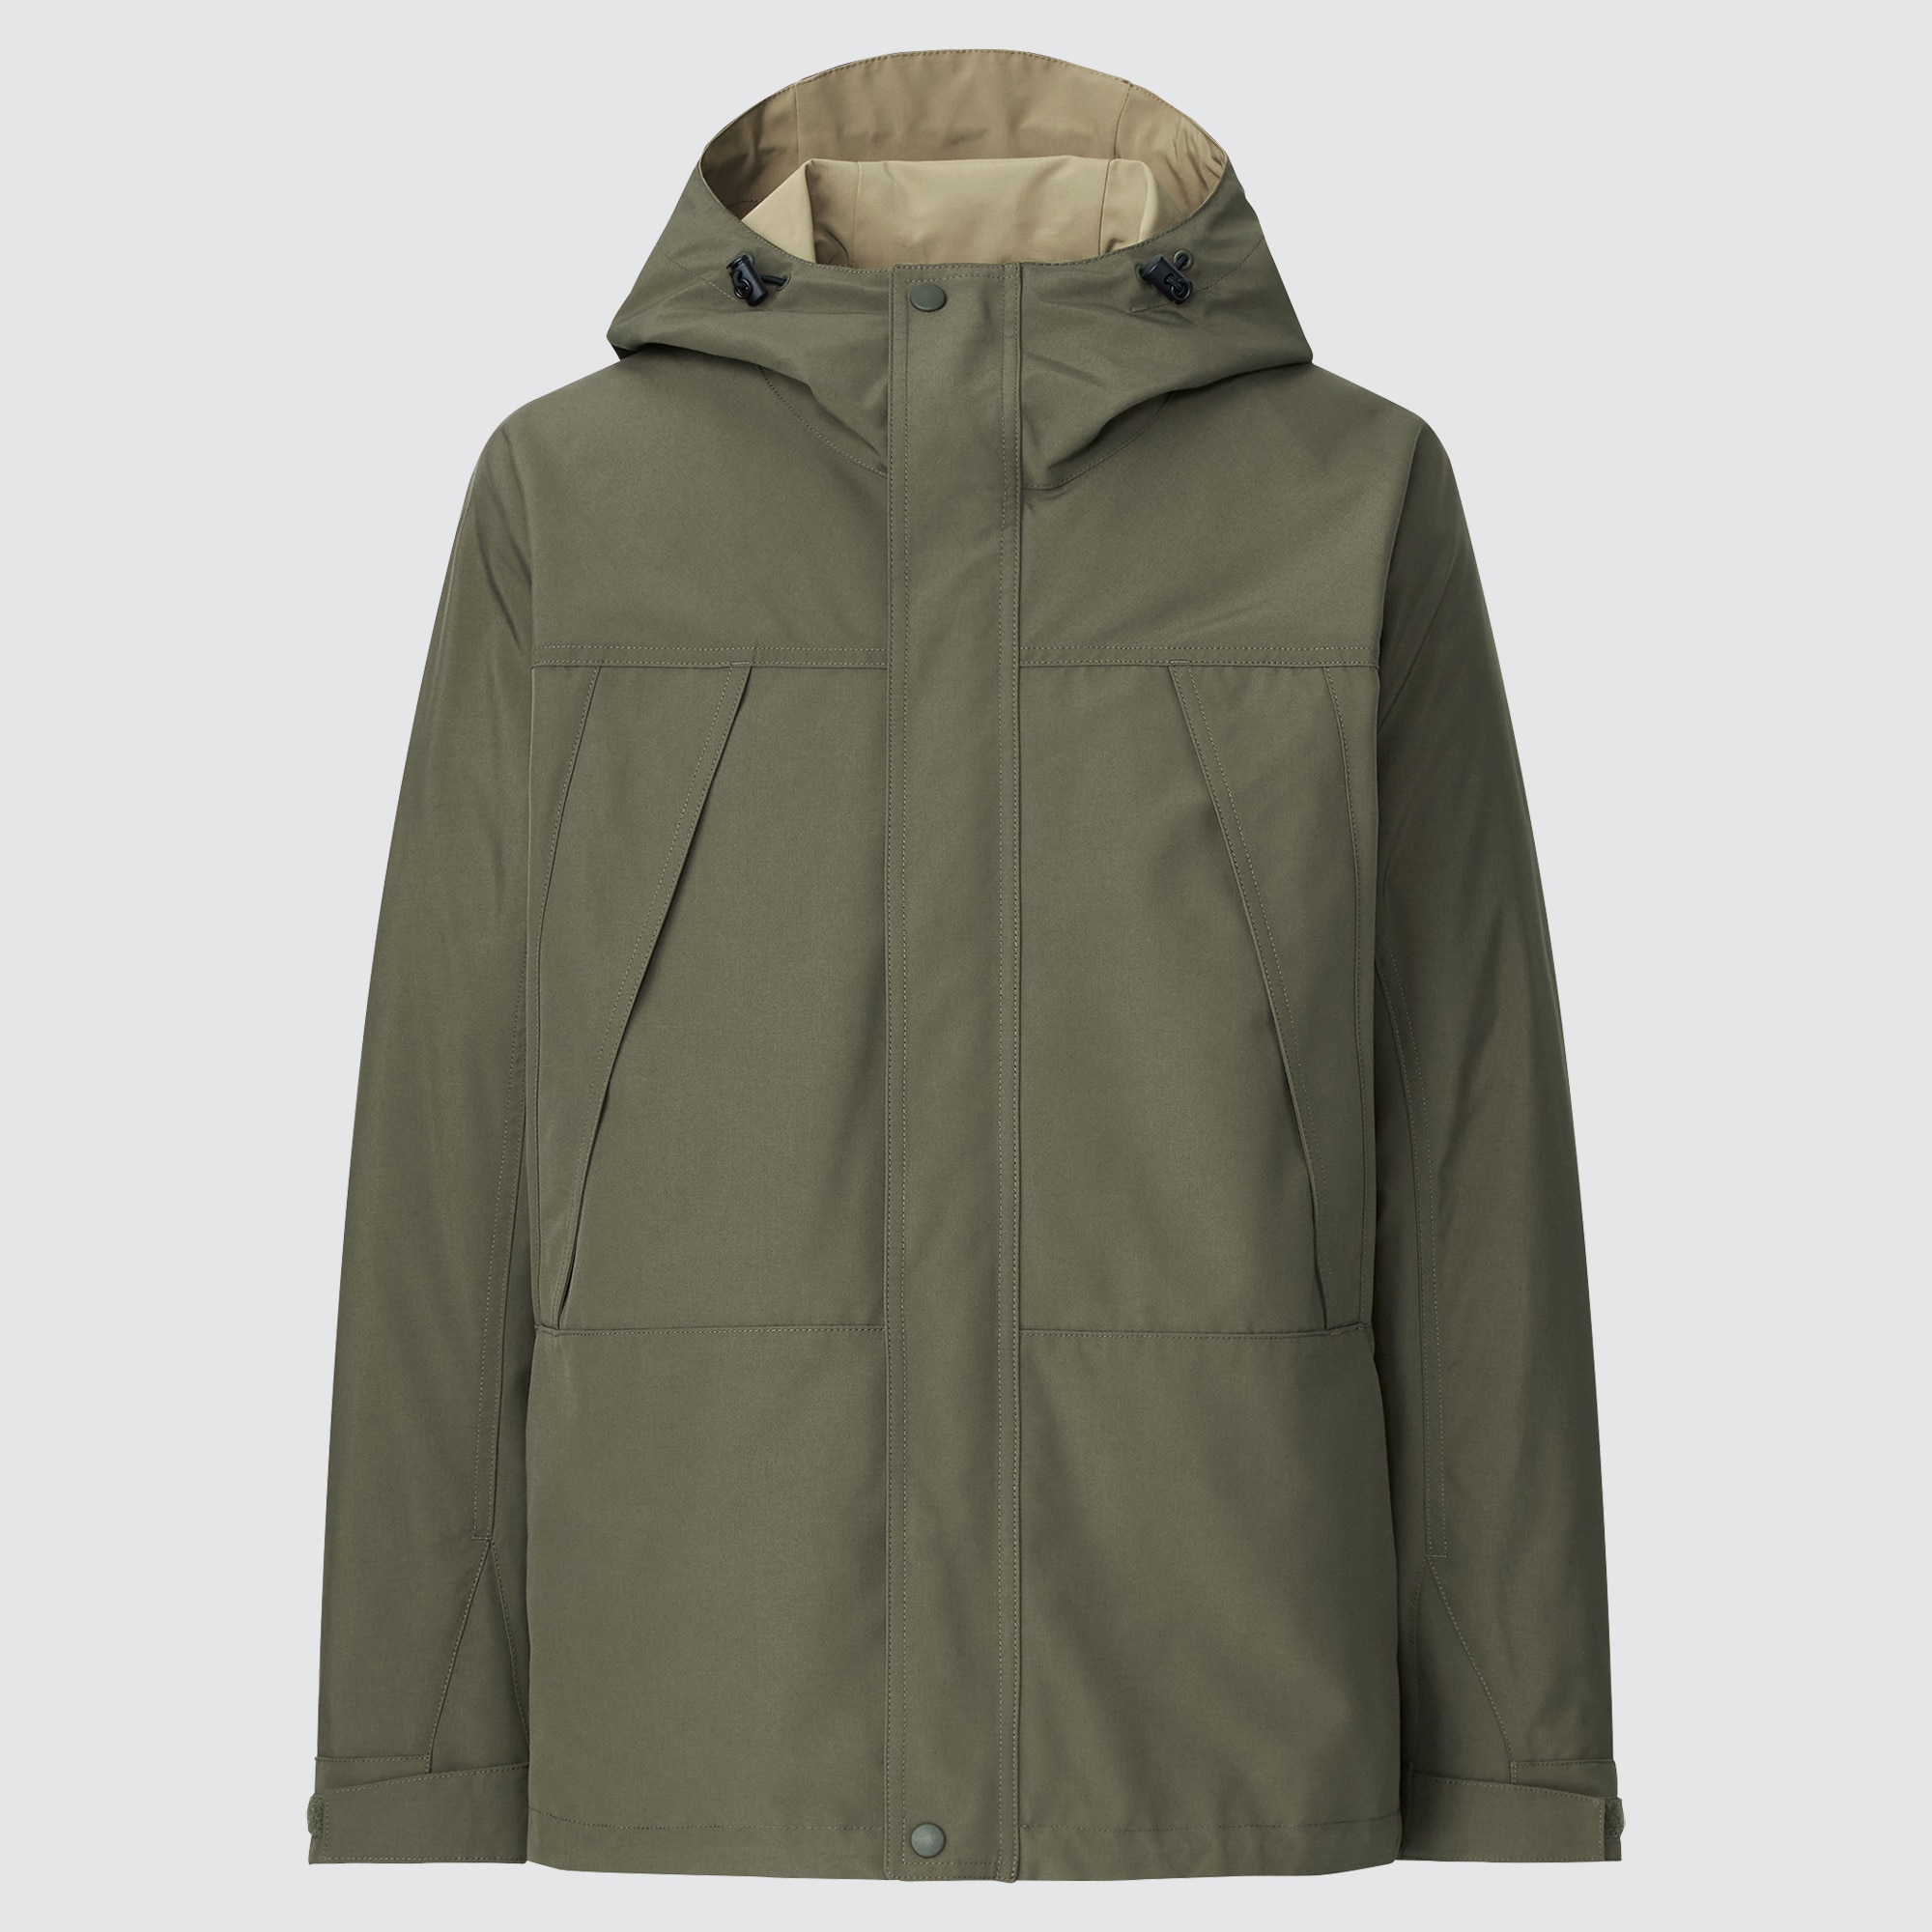 Uniqlo Men039s Mountain Parka Field Jacket Size XL NEW  eBay